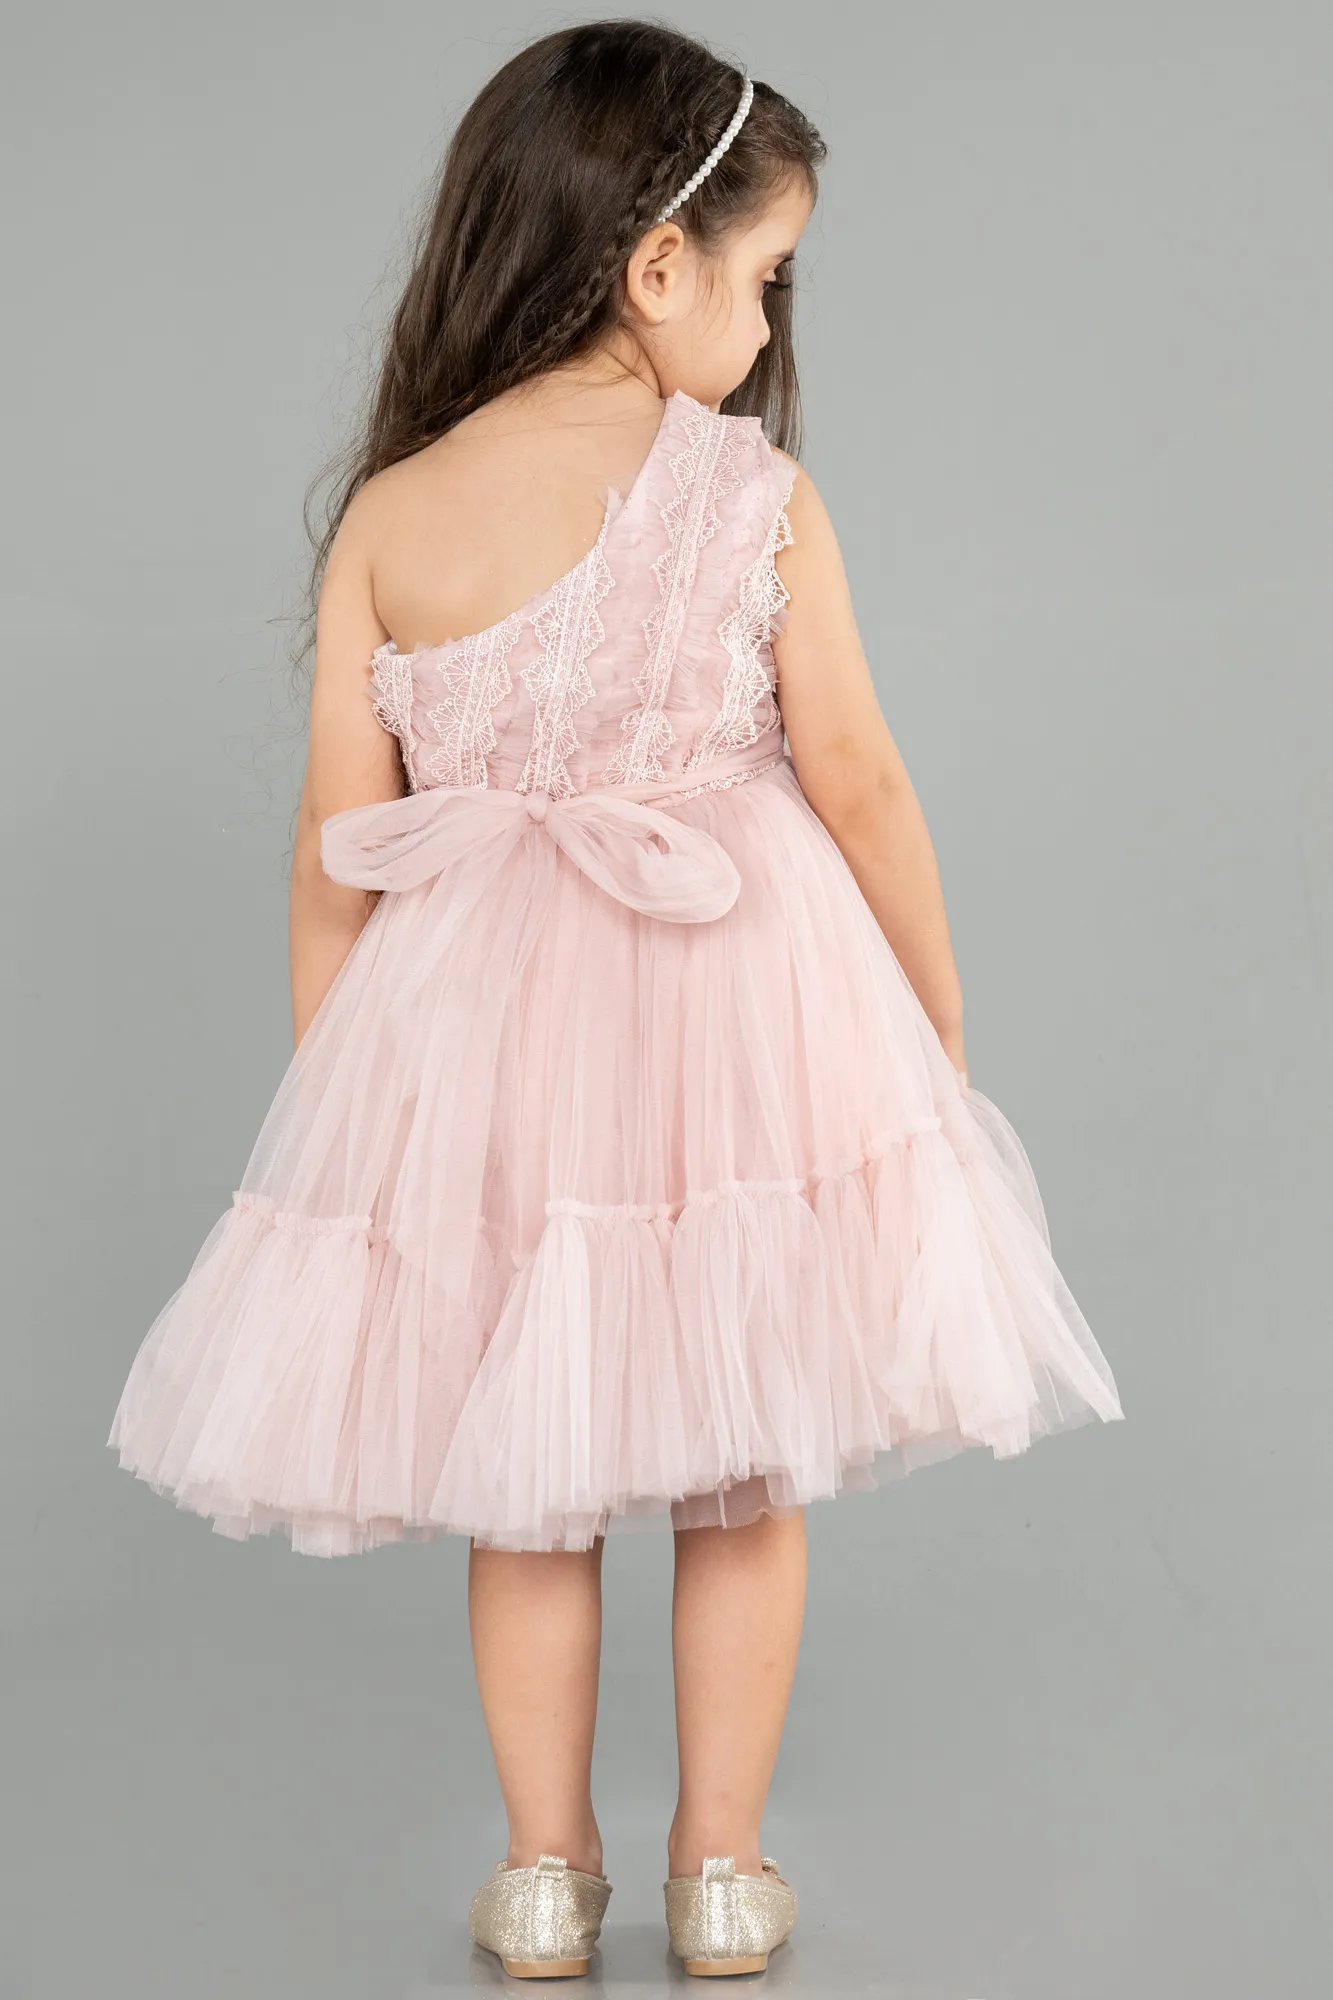 Powder Color-Short Girl Dress ABK1765